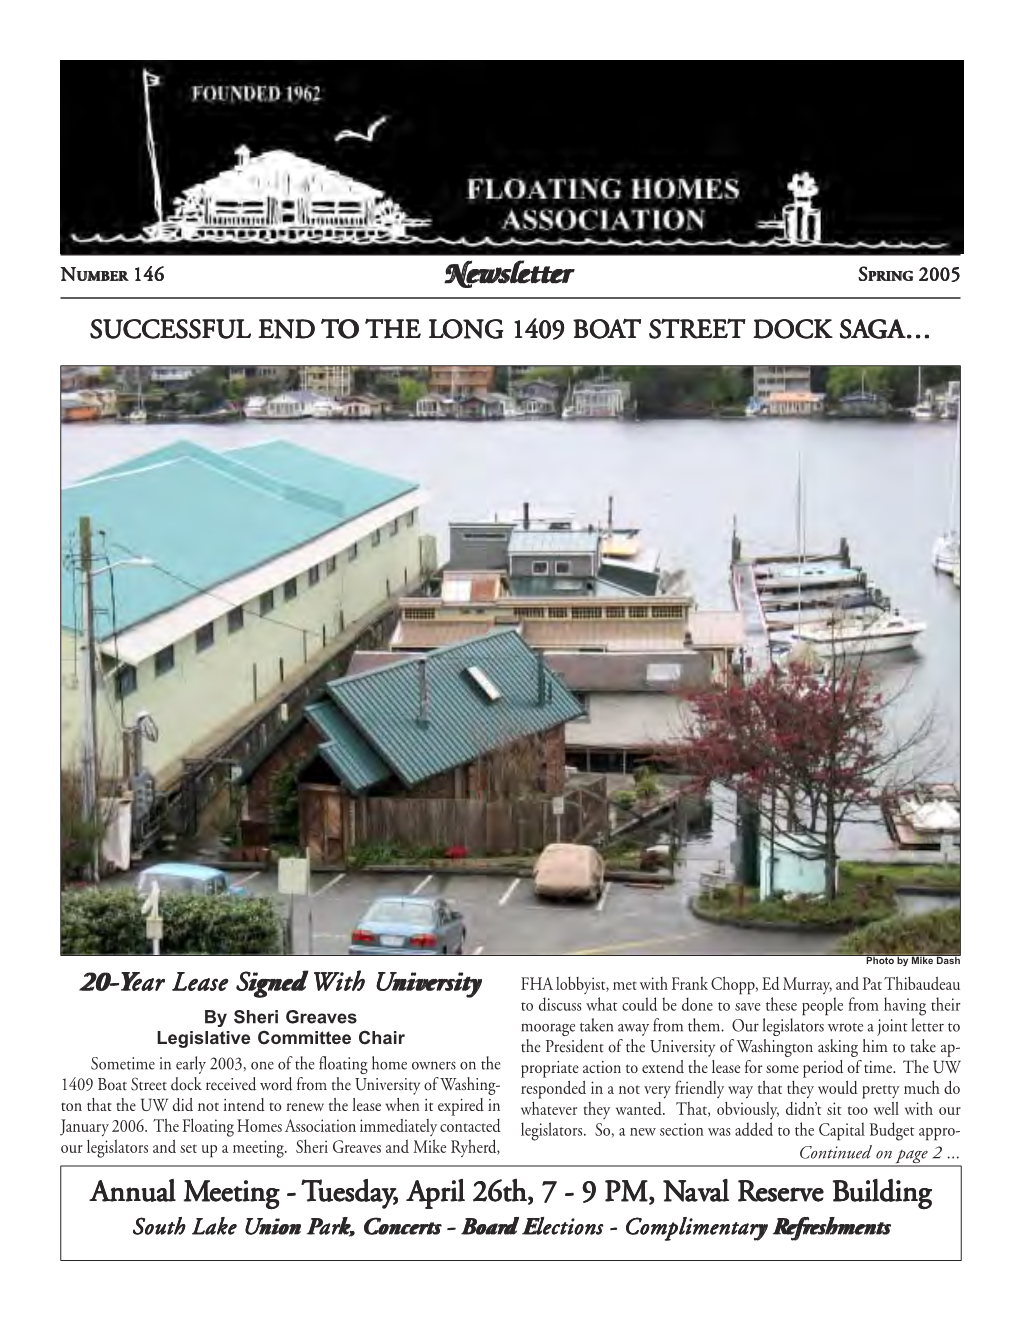 Seattle Floating Homes Newsletter